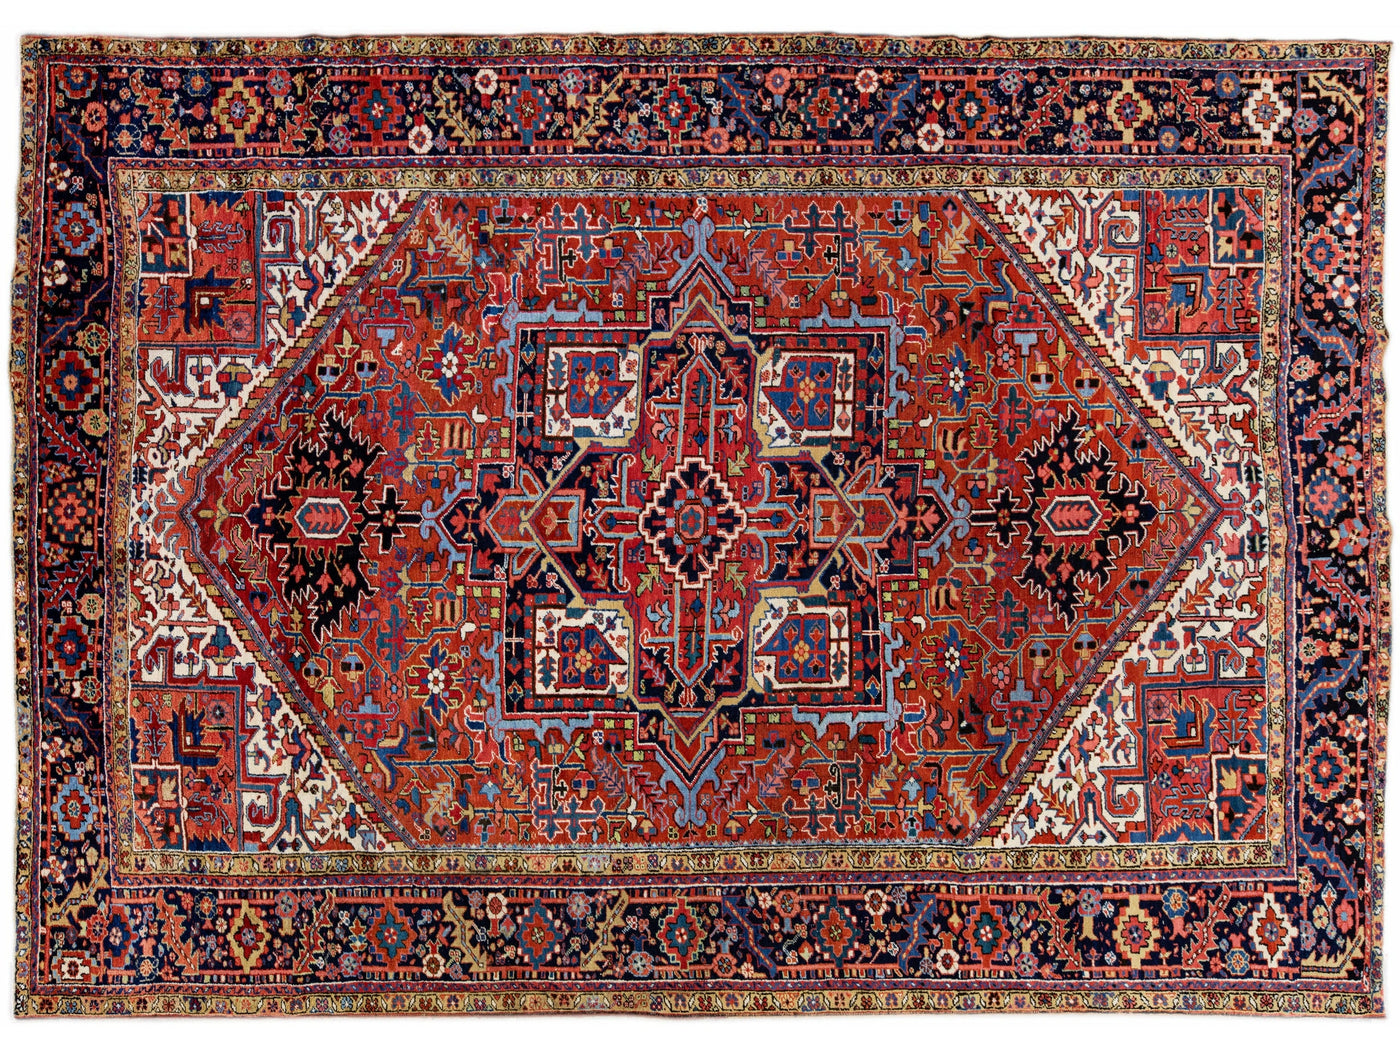 Antique Persian Heriz Handmade Orange-Rust Wool Rug with Medallion Design